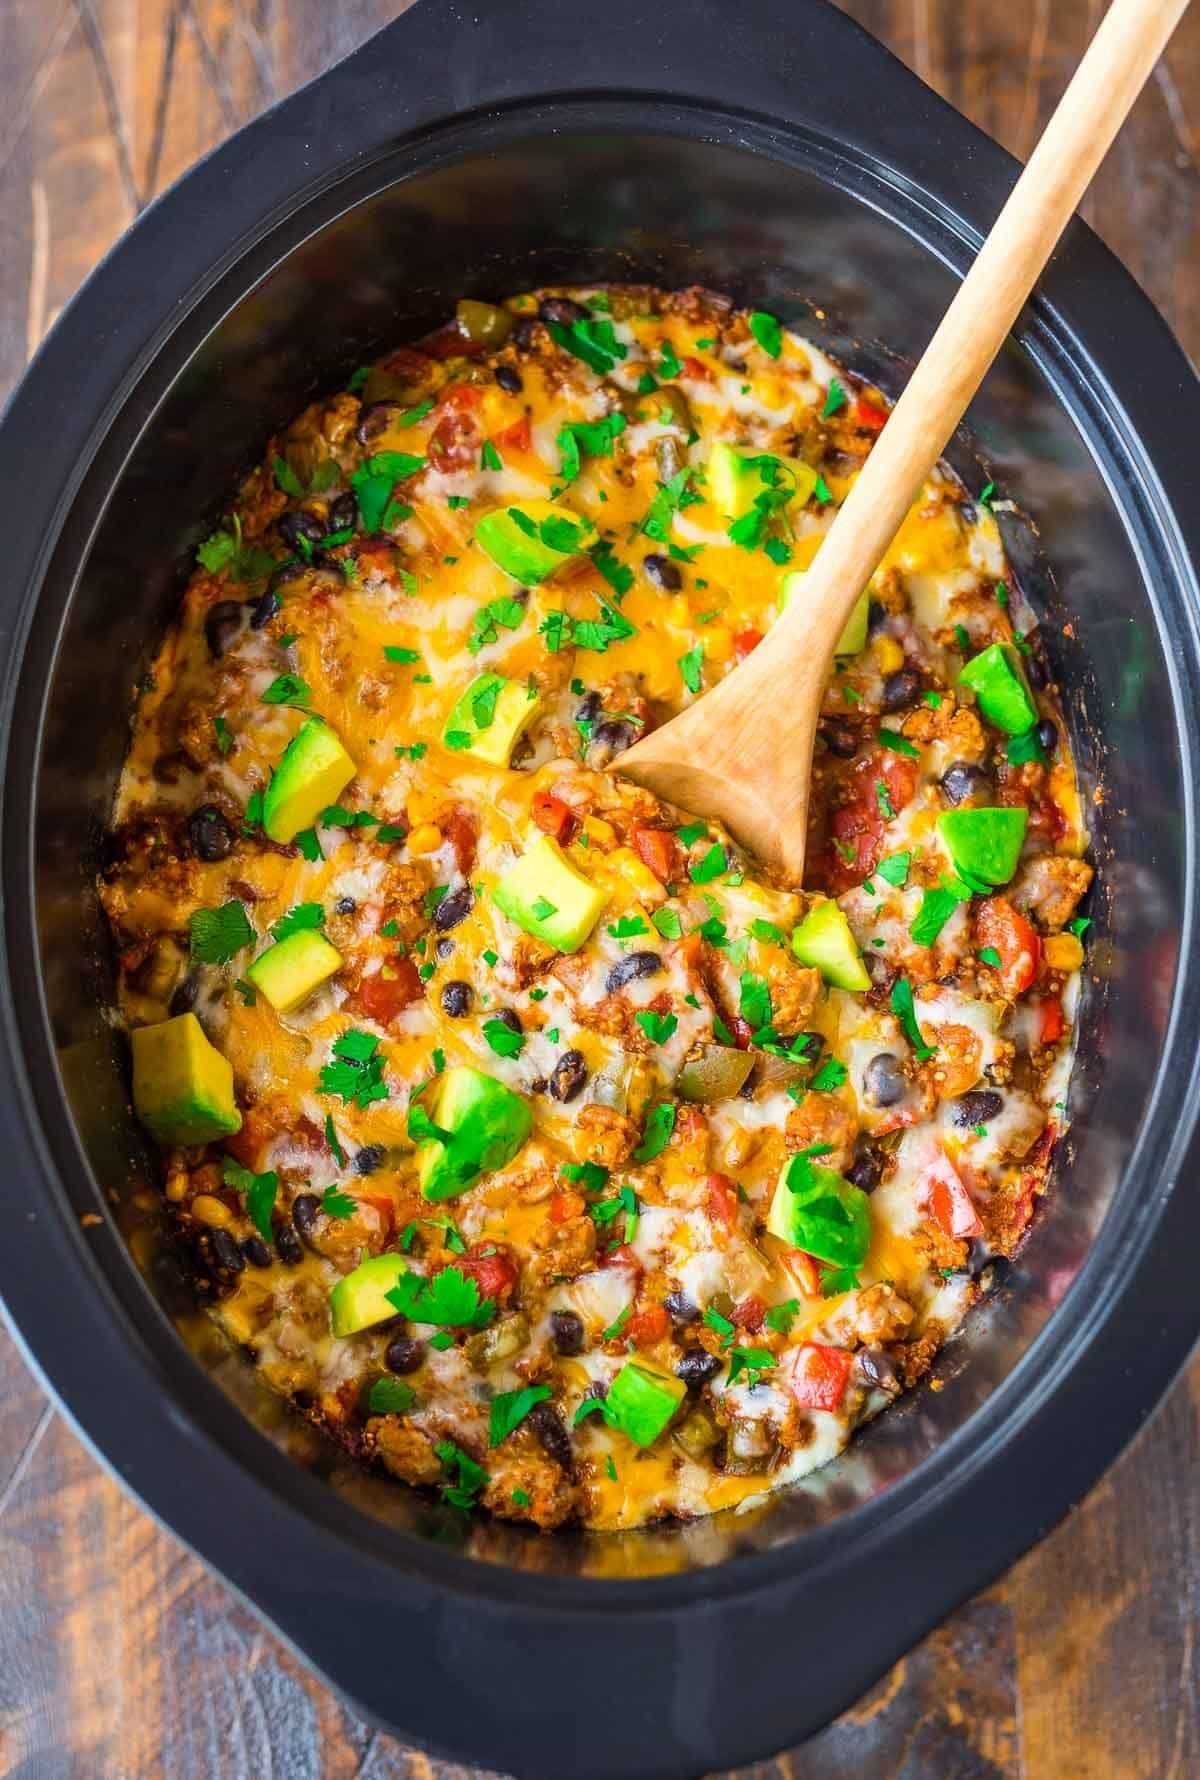 10 Stylish Ideas For Crock Pot Meals crock pot mexican casserole 2 2022